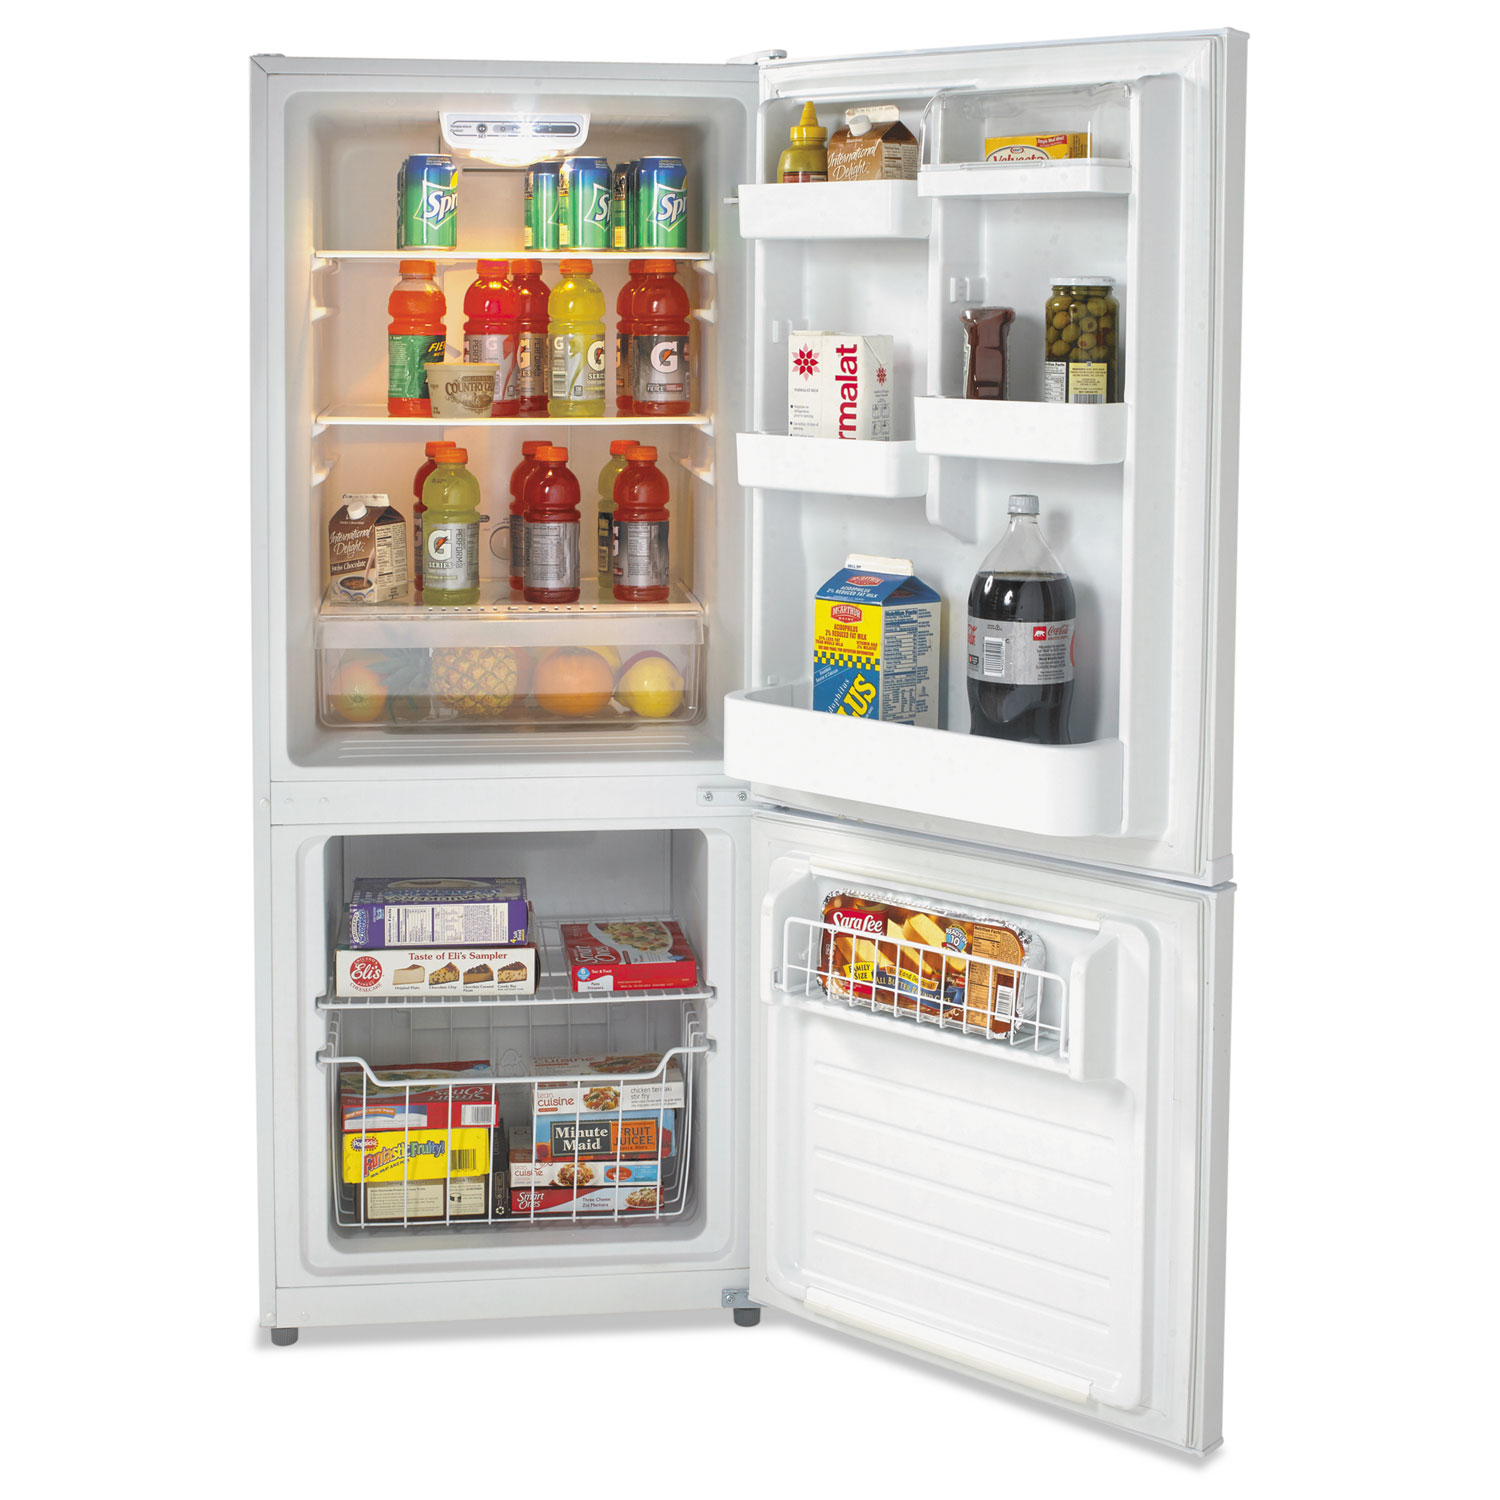  Avanti FFBM92H0W Bottom Mounted Frost-Free Freezer/Refrigerator, 10.2 Cubic Feet, White (AVAFFBM92H0W) 